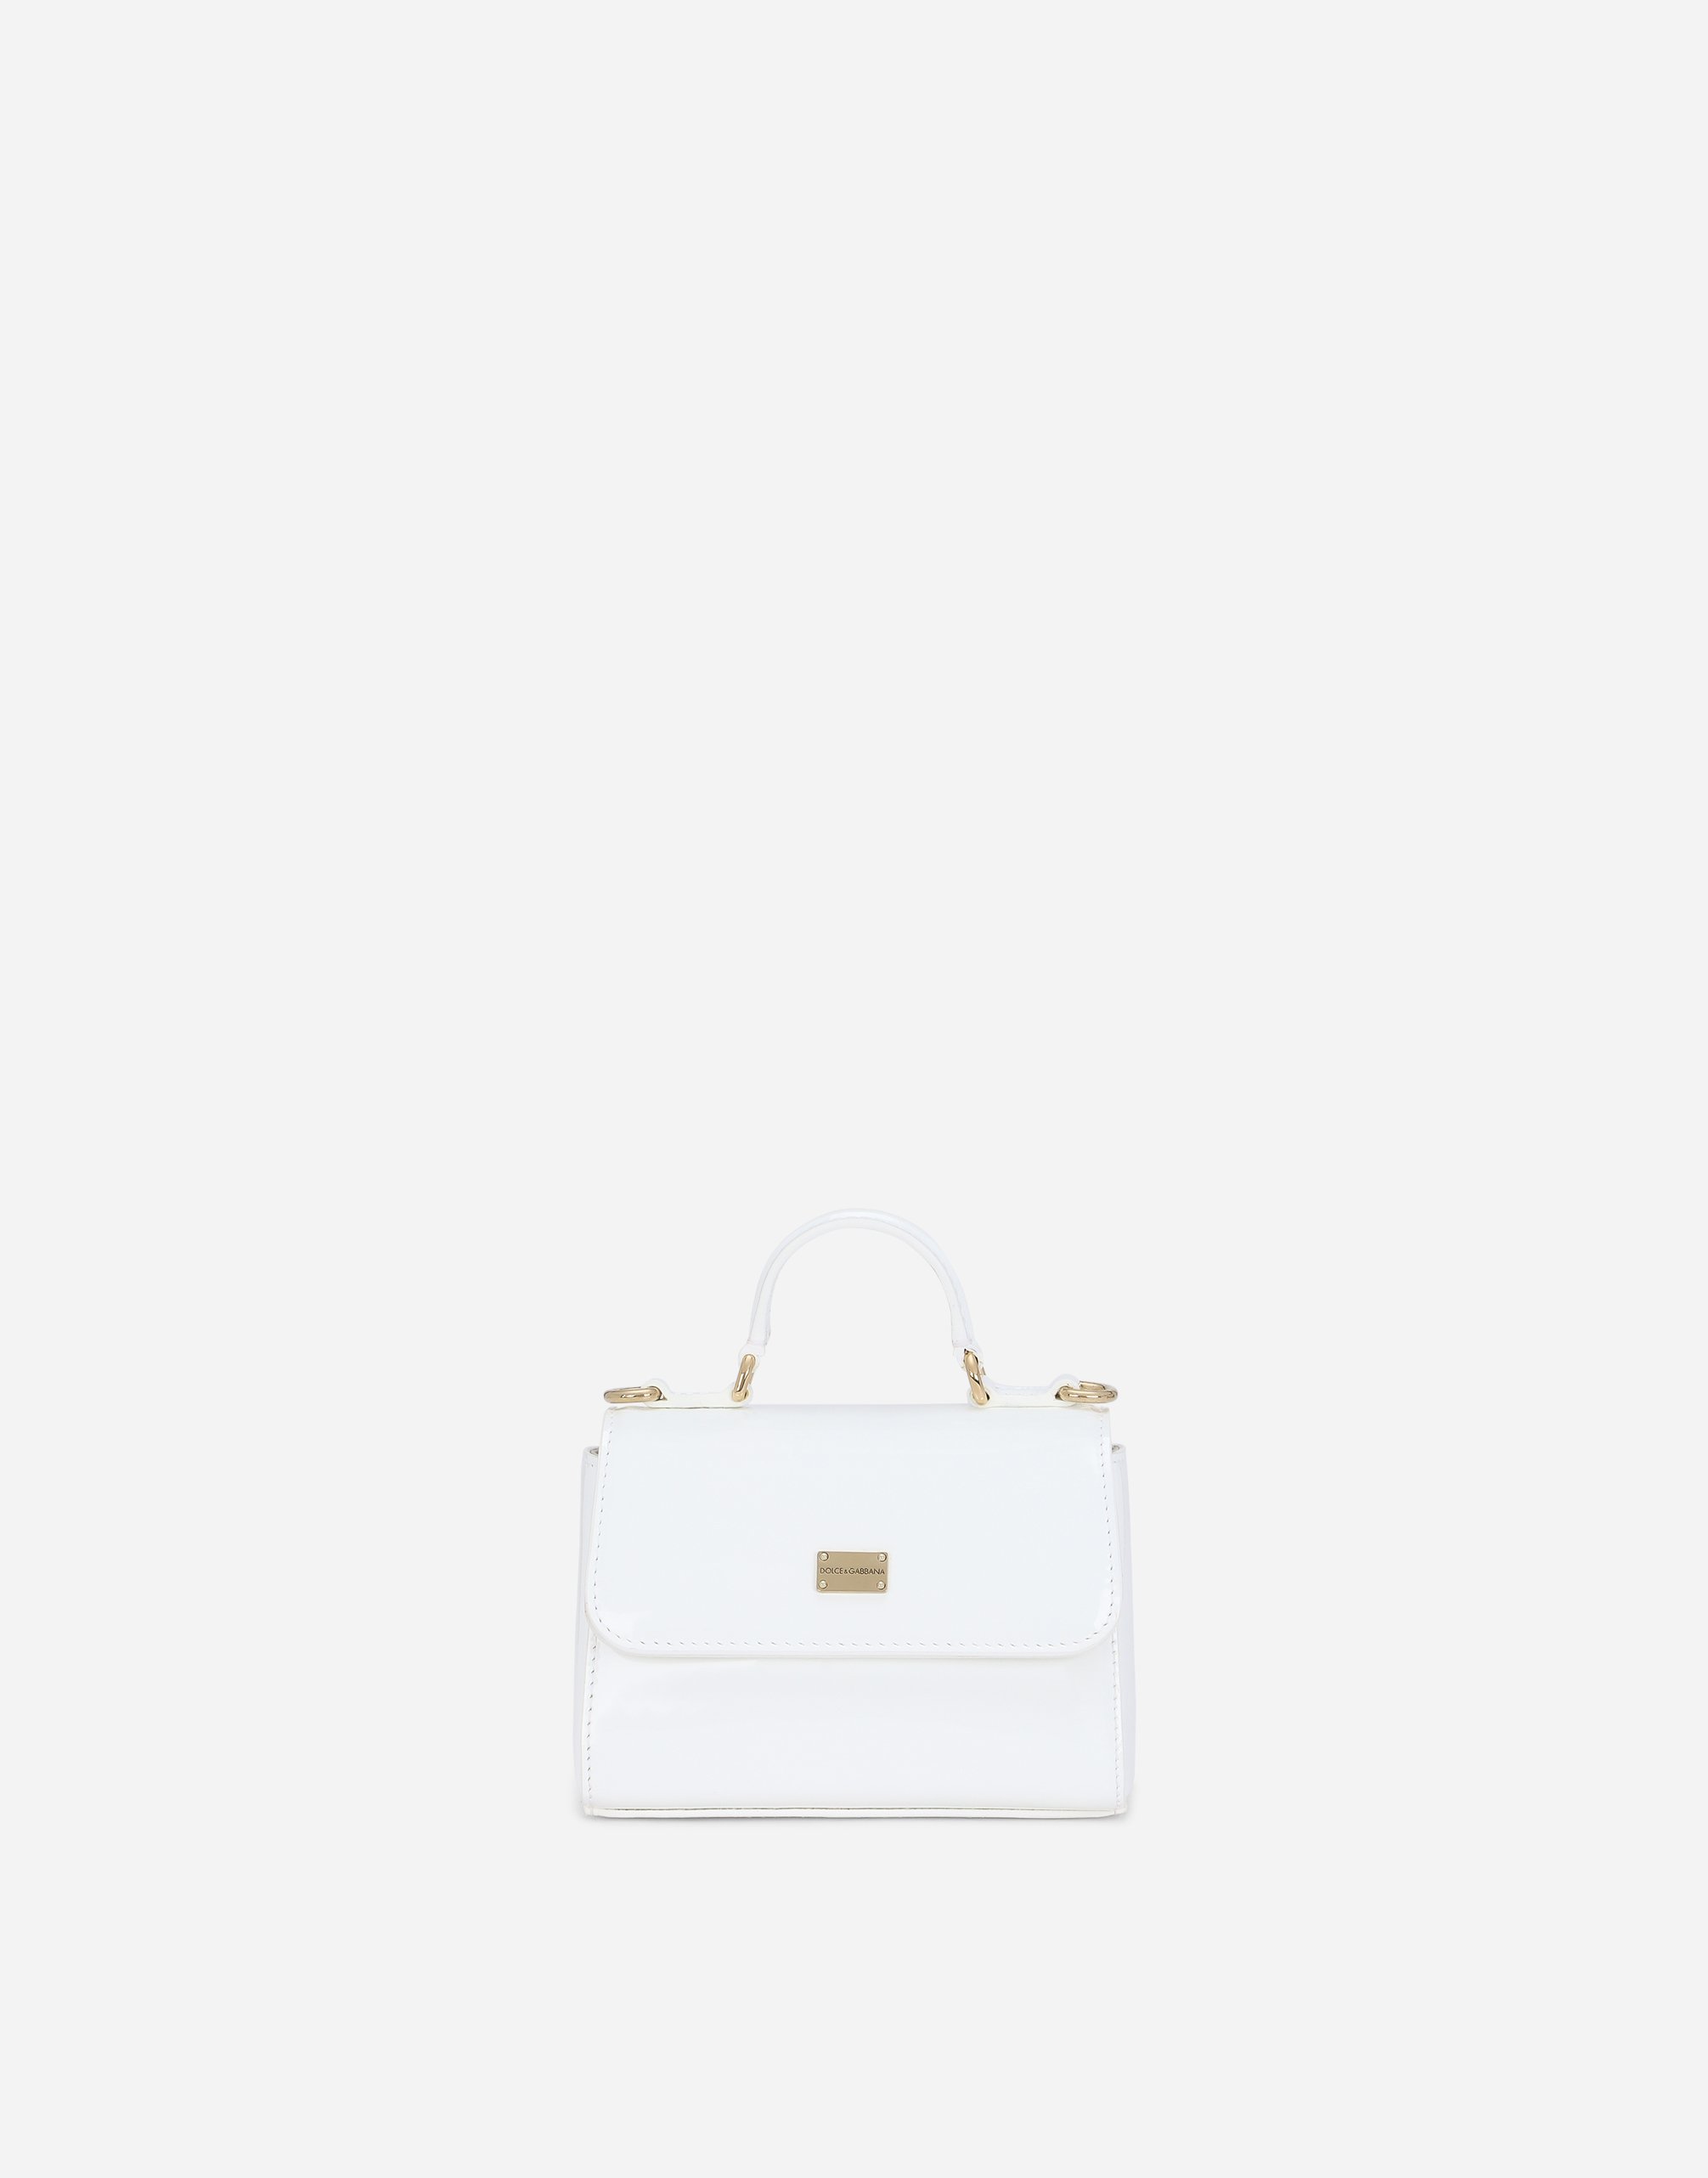 Patent leather handbag in White